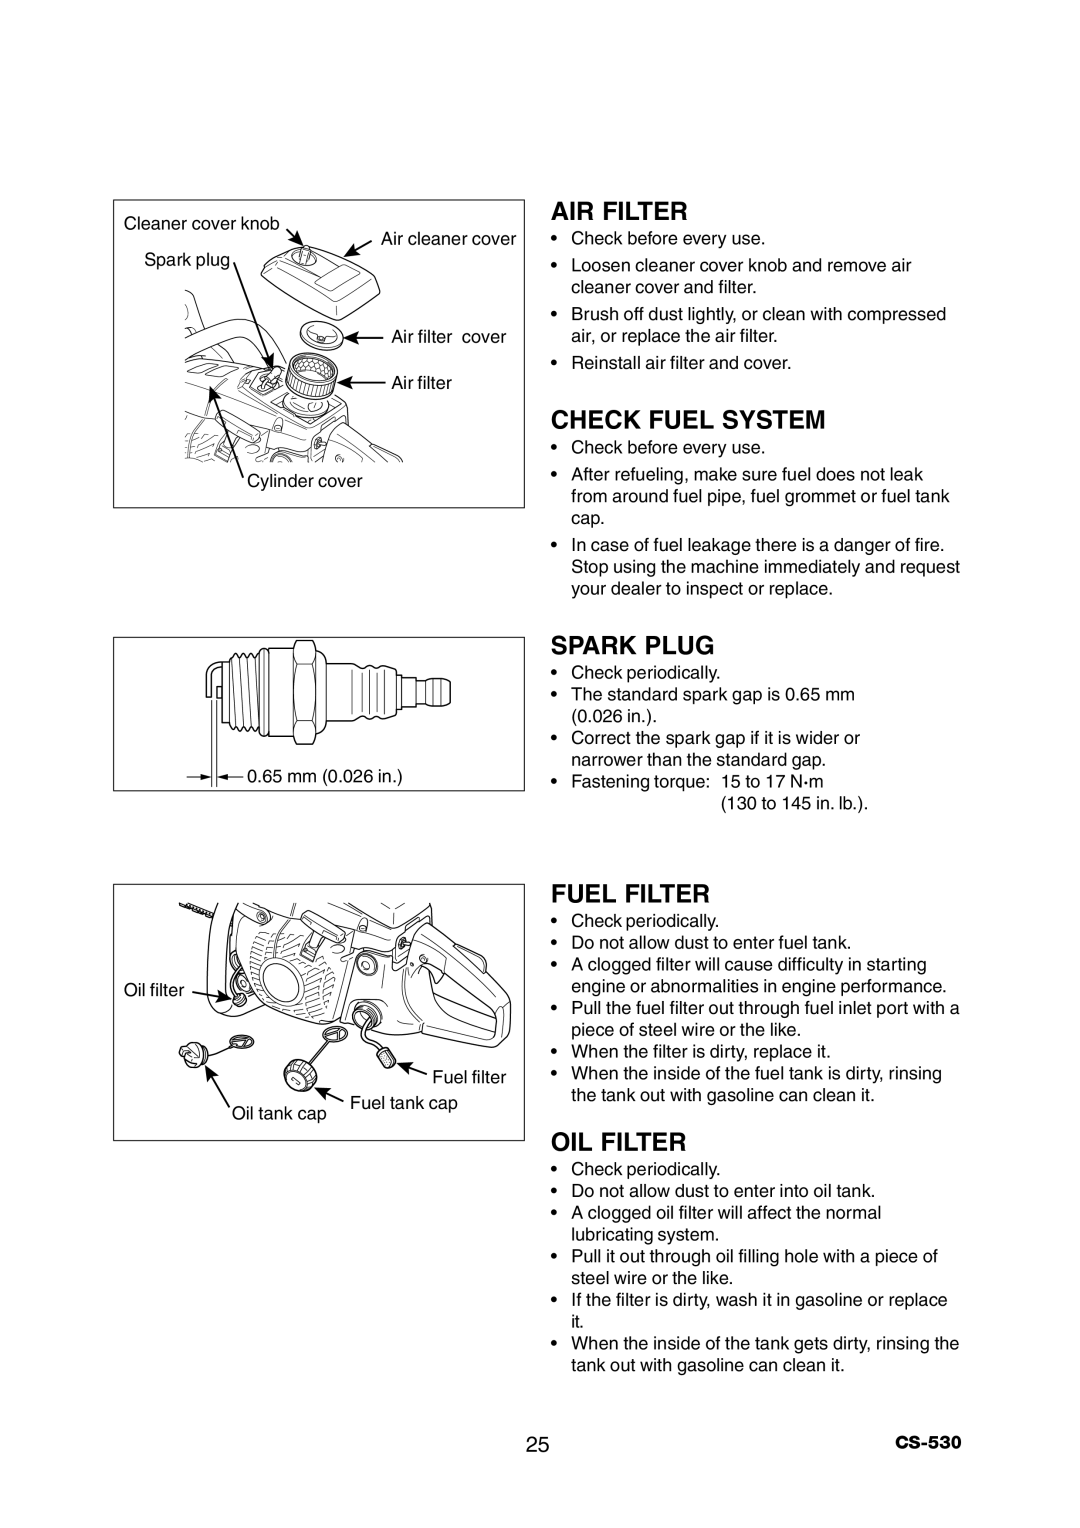 Echo CS-530 instruction manual Air Filter, Check Fuel System, Spark Plug, Fuel Filter, Oil Filter 